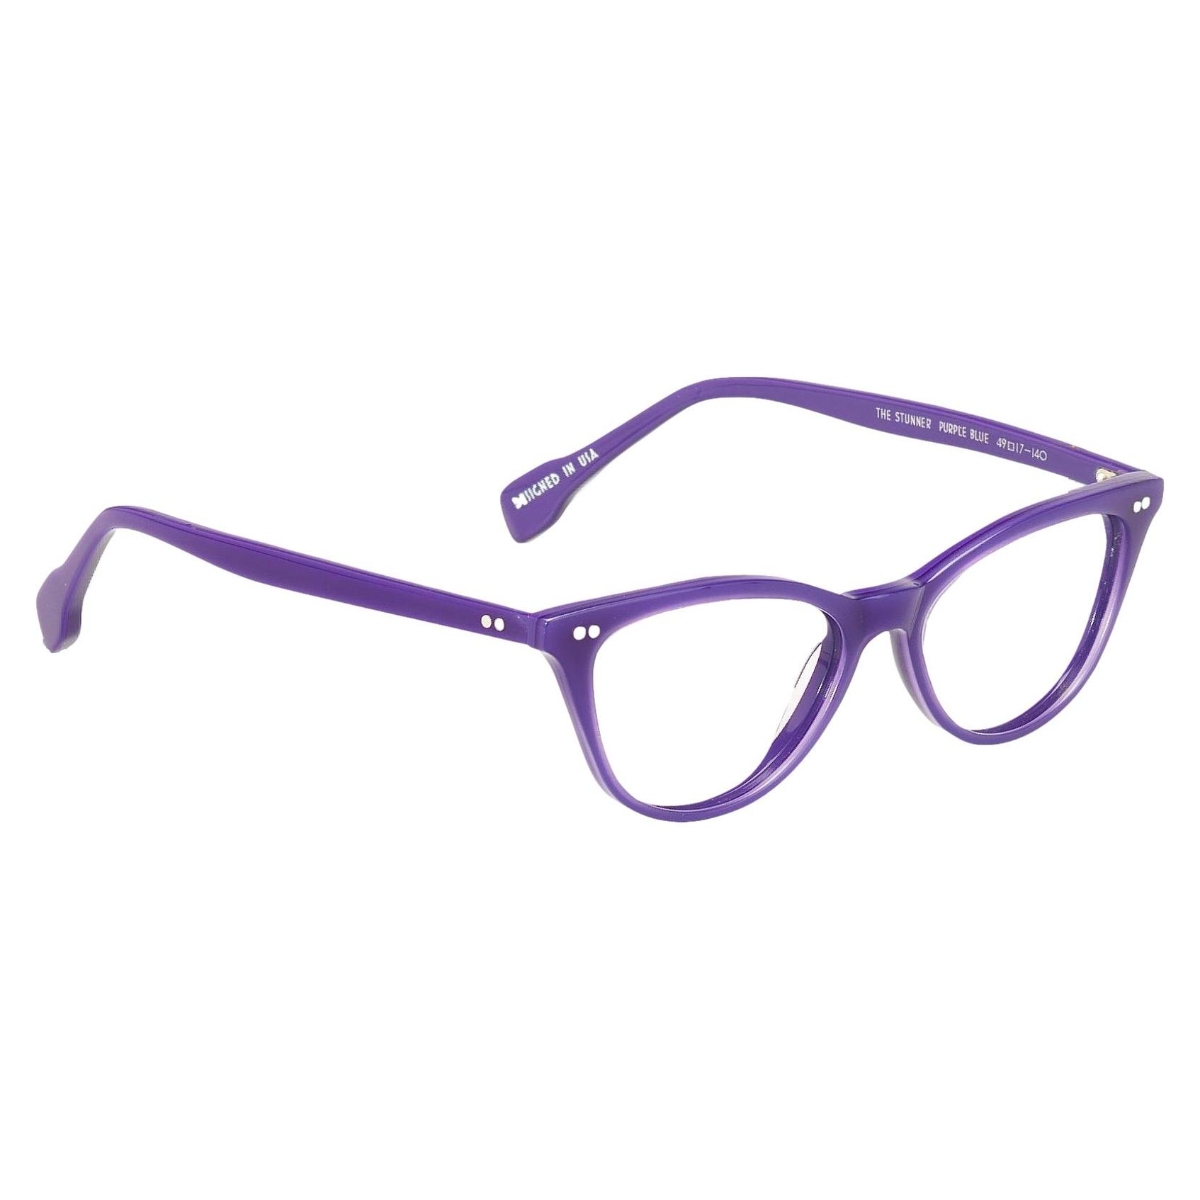 Sugar Specs - The Stunner 04 Purple Blue